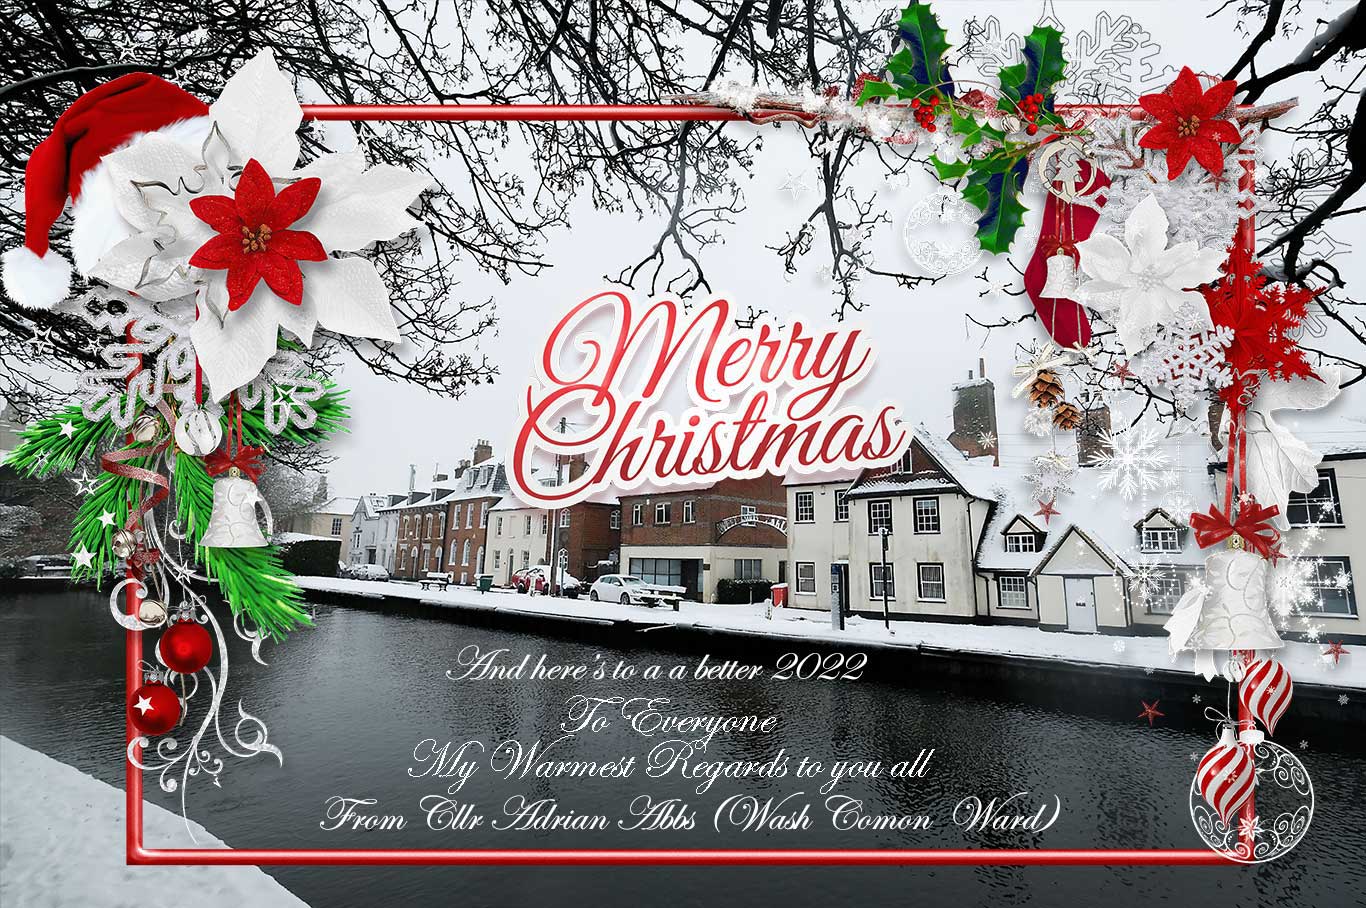 Merry Xmas from Cllr Adrian Abbs